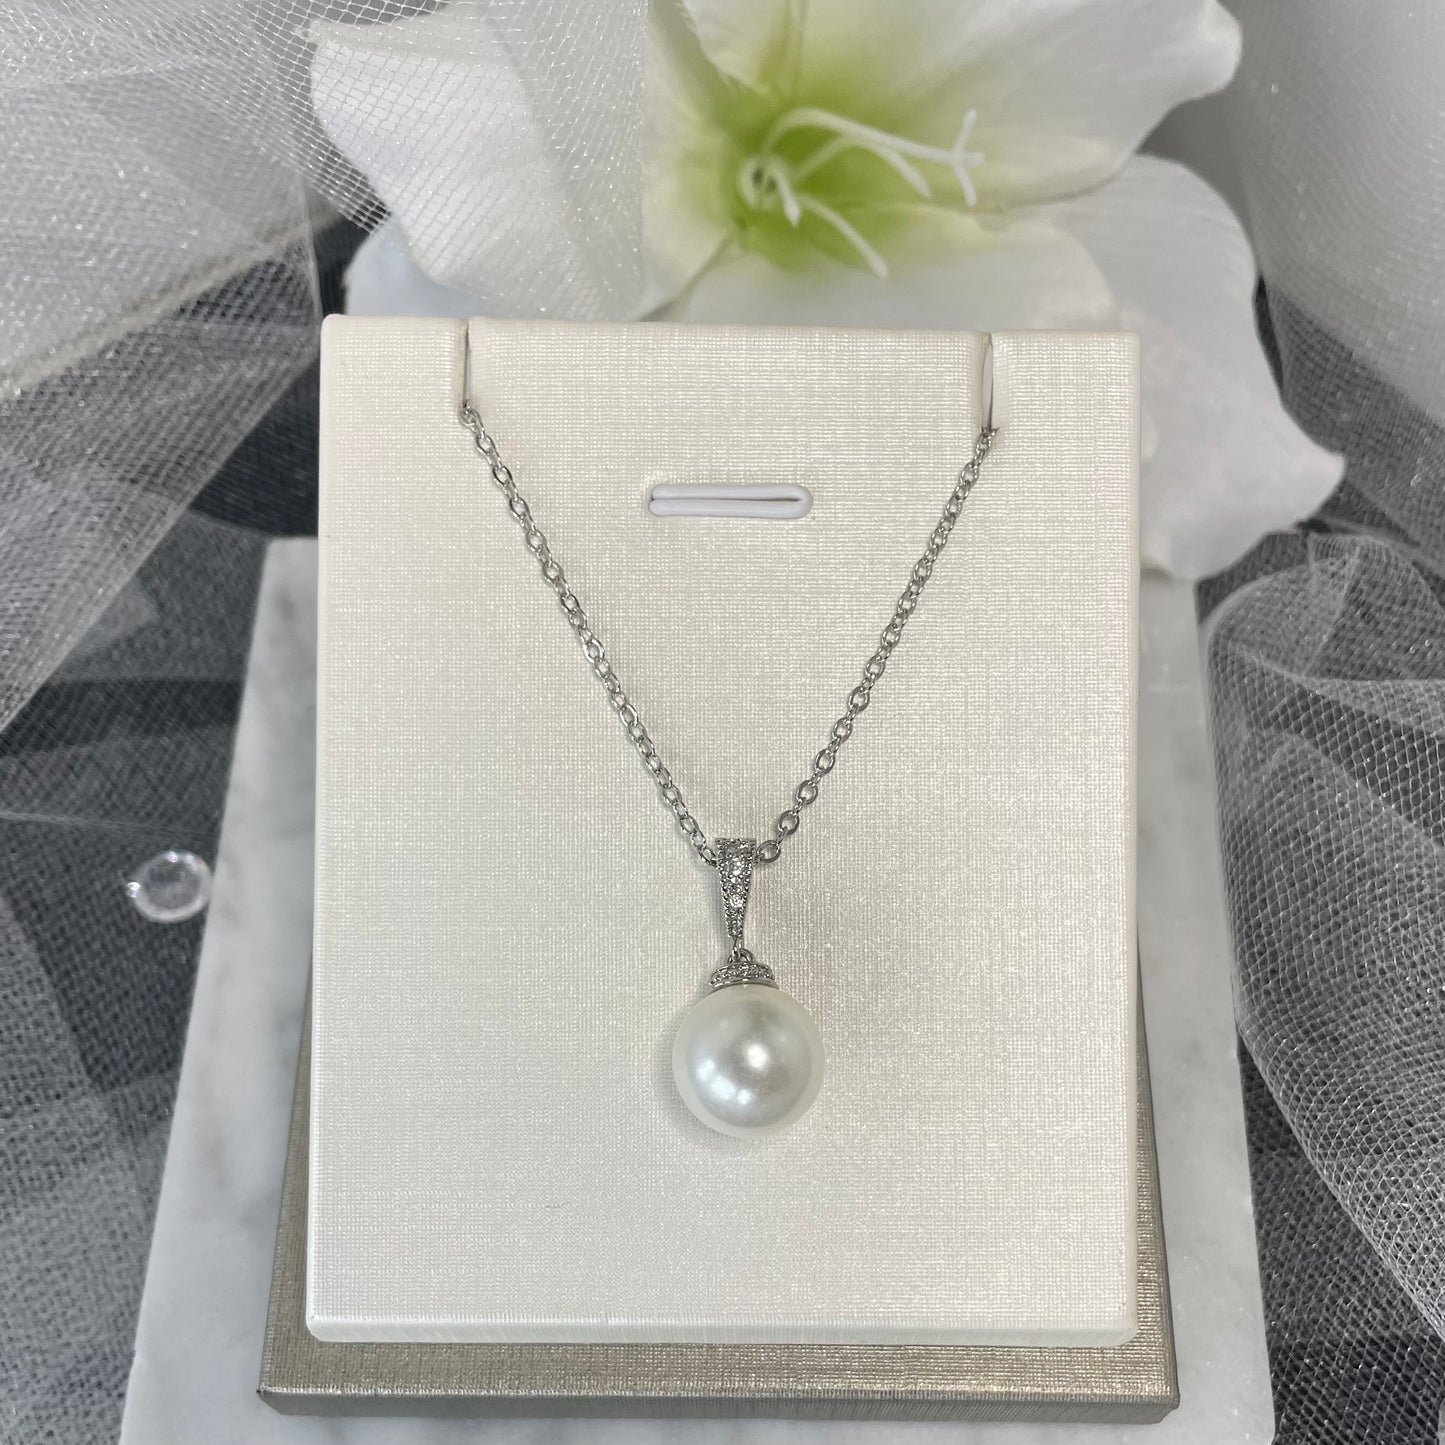 Rite pearl necklace